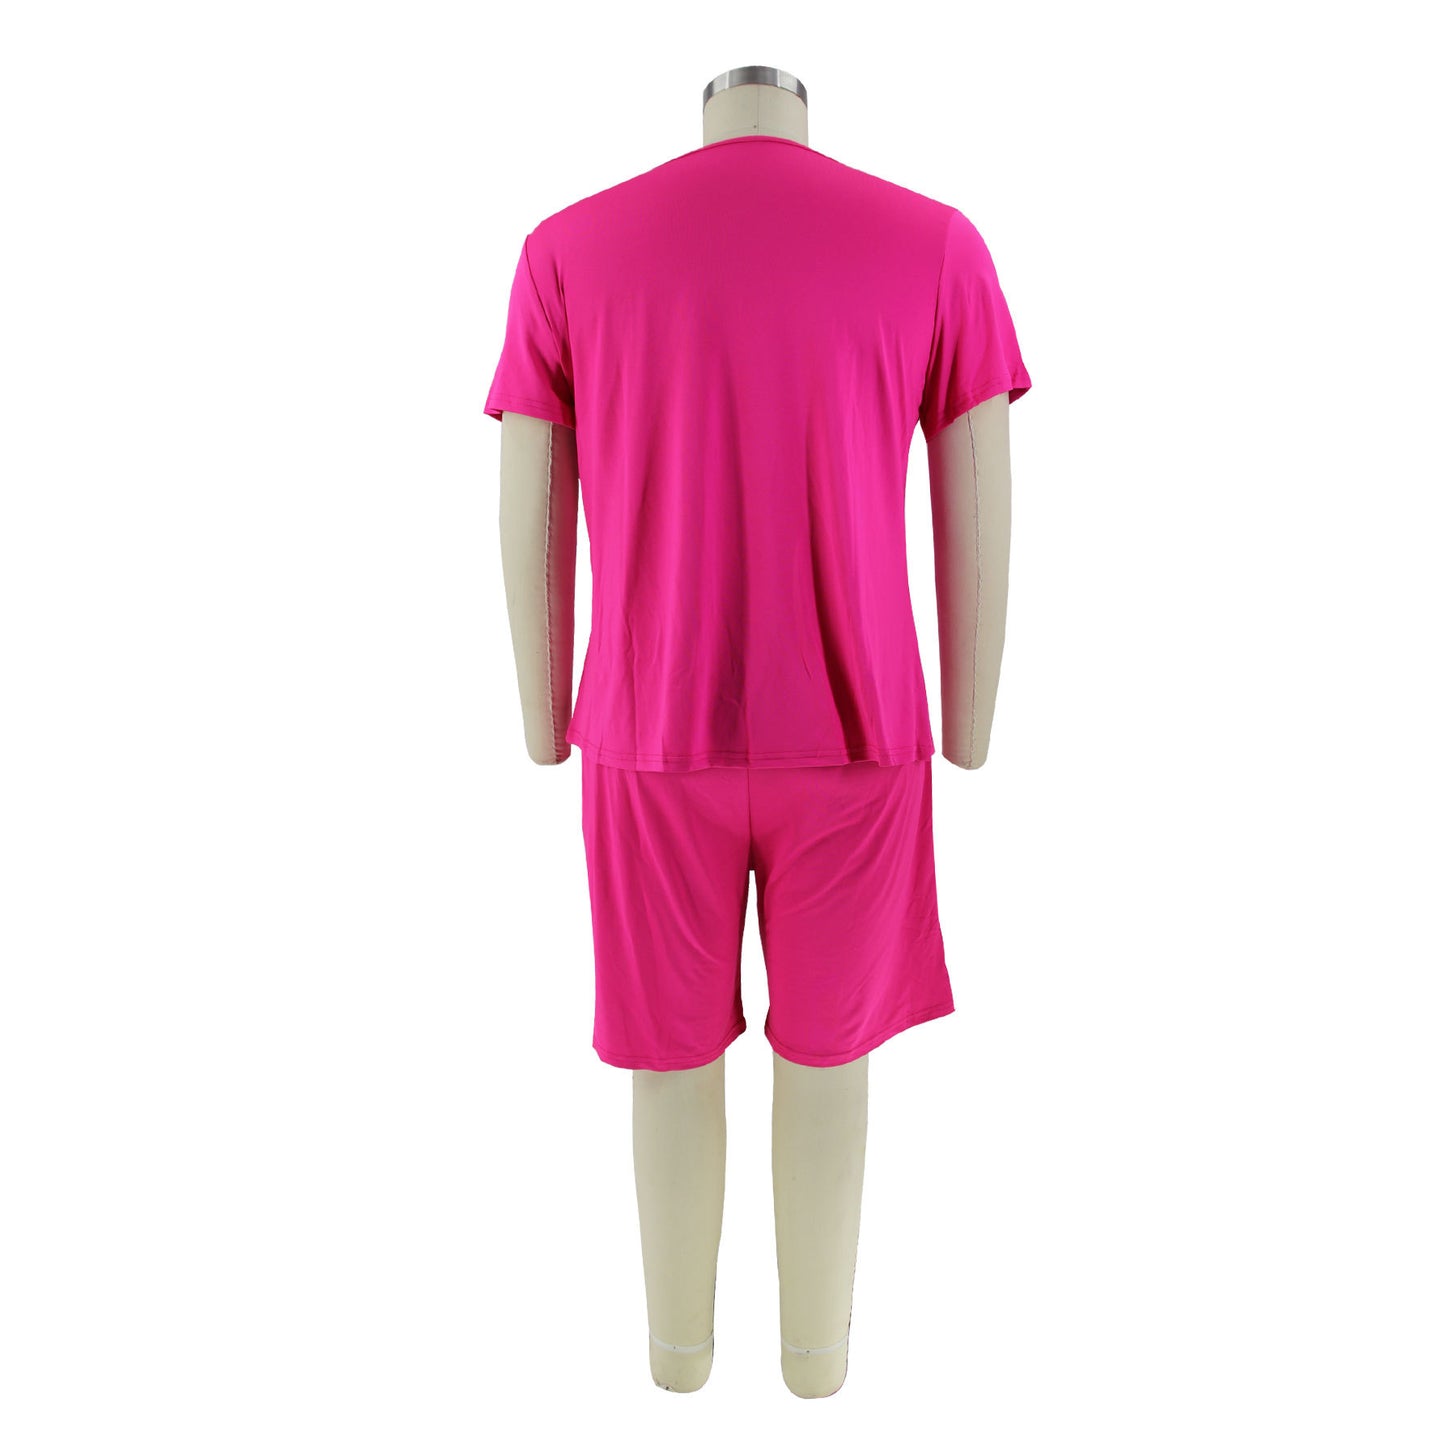 BamBam Plus Size Women's Casual Solid Round Neck Short Sleeve T-Shirt Shorts Two Piece Set - BamBam